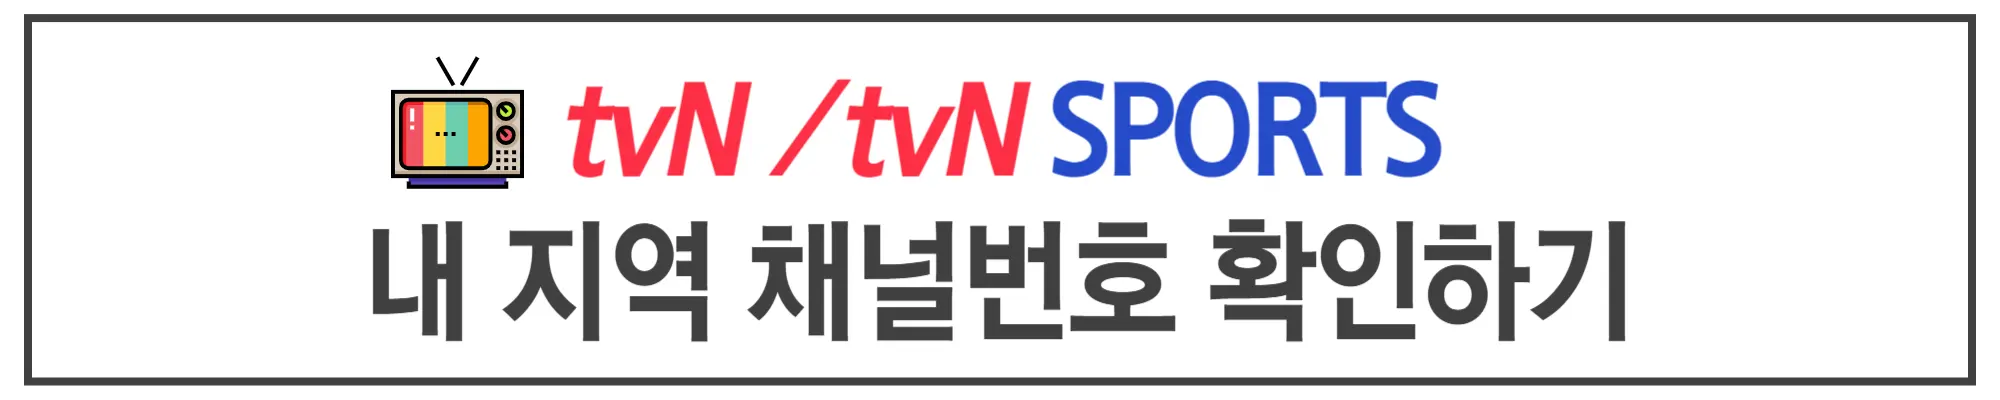 tvN 채널번호&#44; tvN SPORTS 채널번호